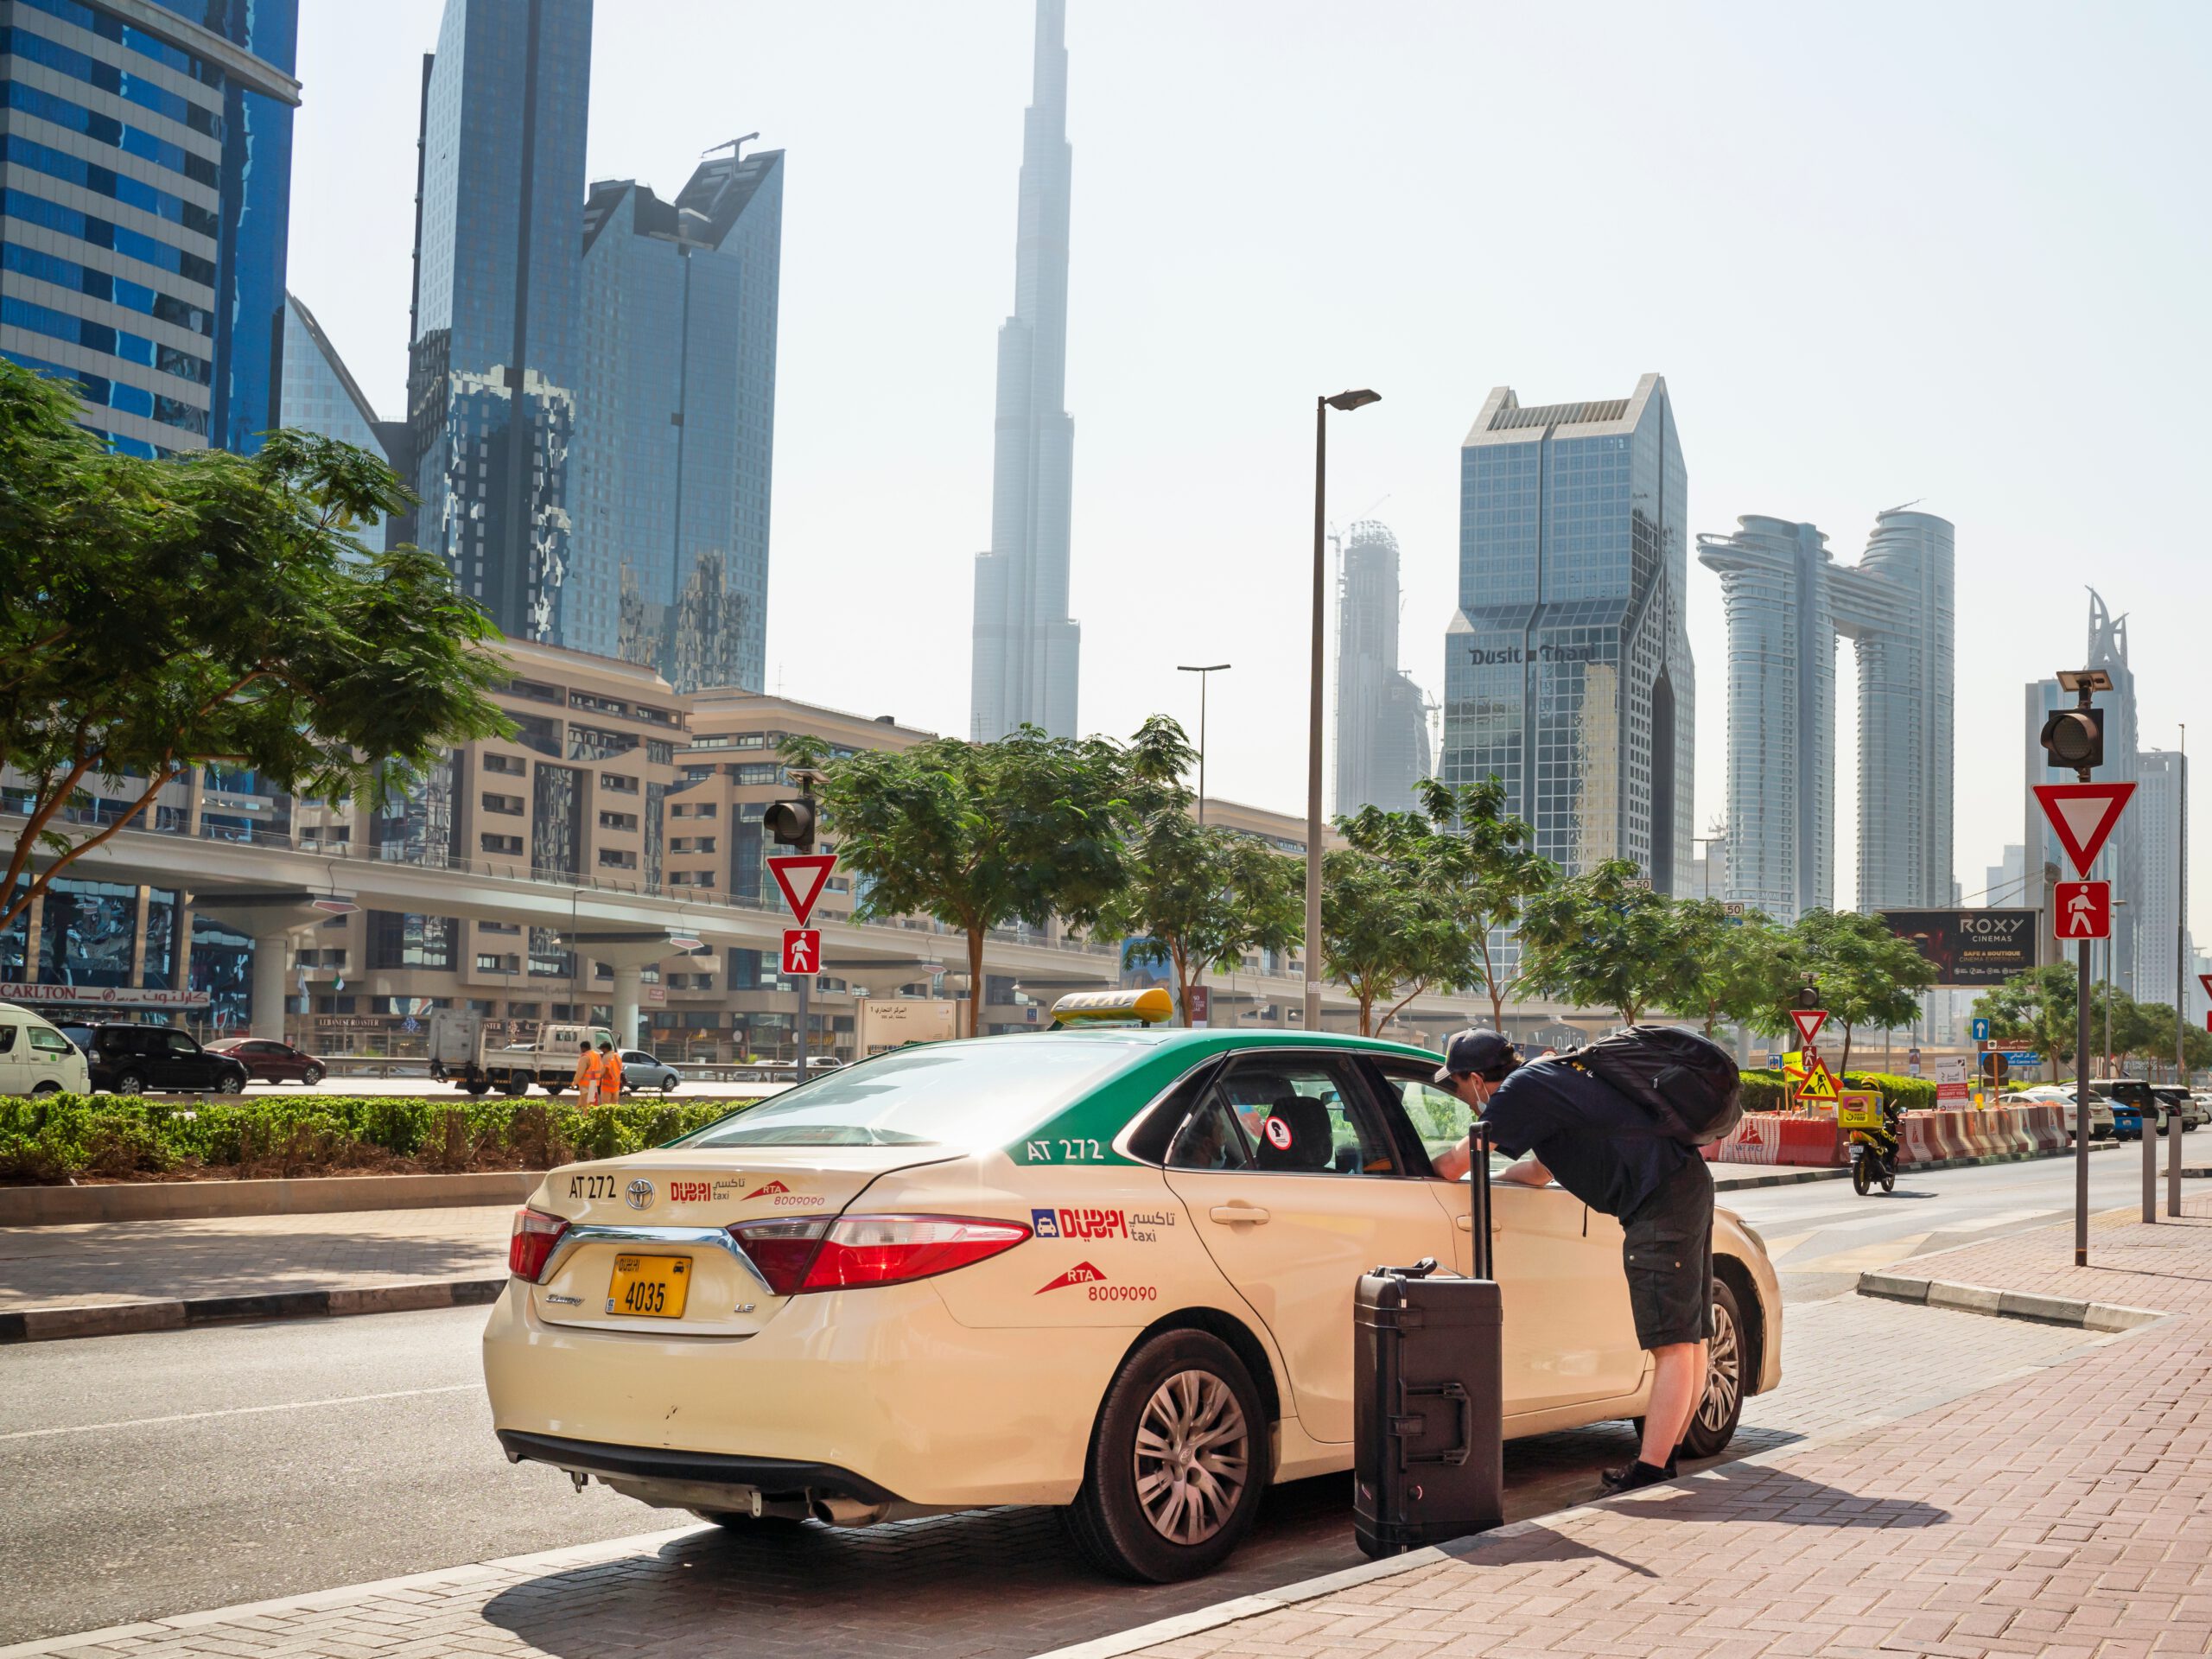 Dubai Taxi - Hailing a taxi